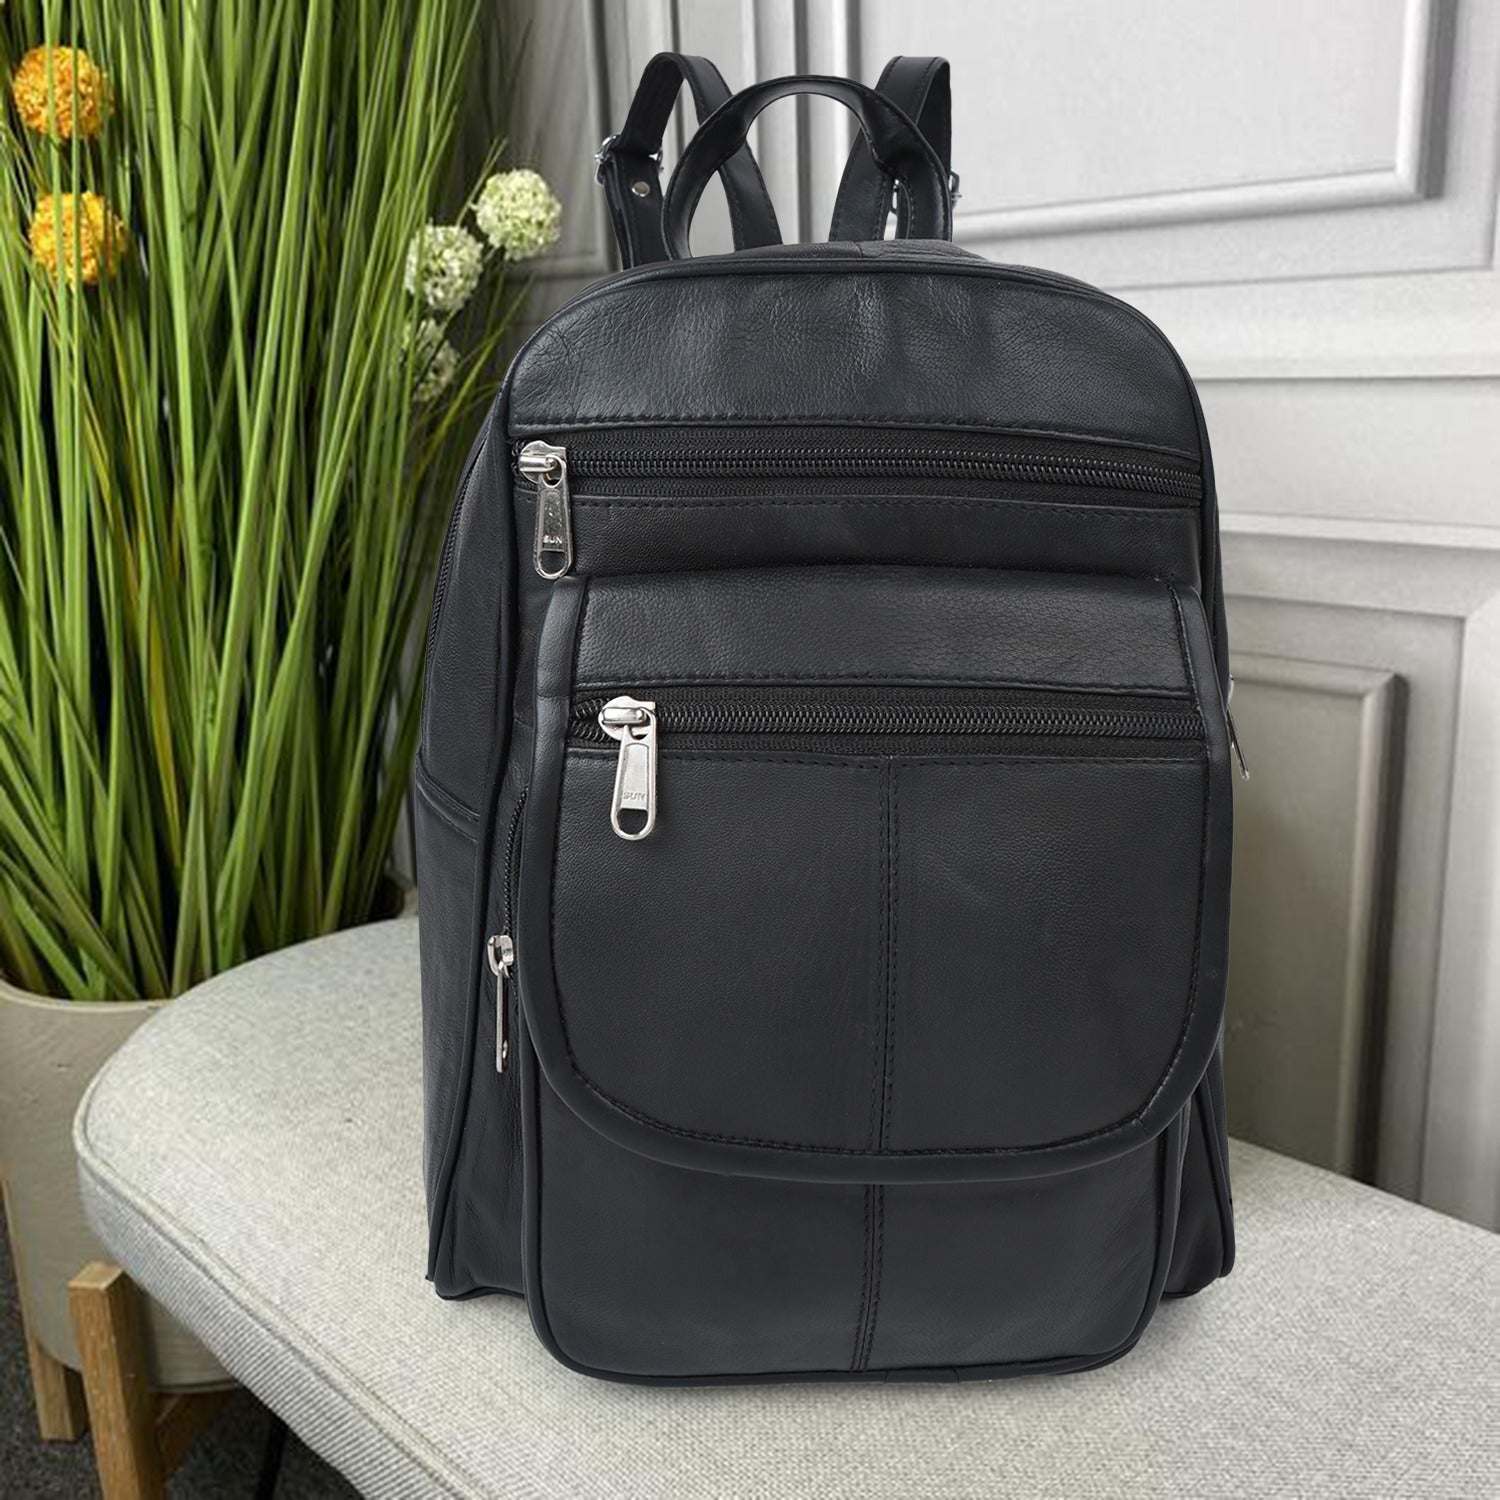 CIMONI Brand Premium Genuine Leather Backpack